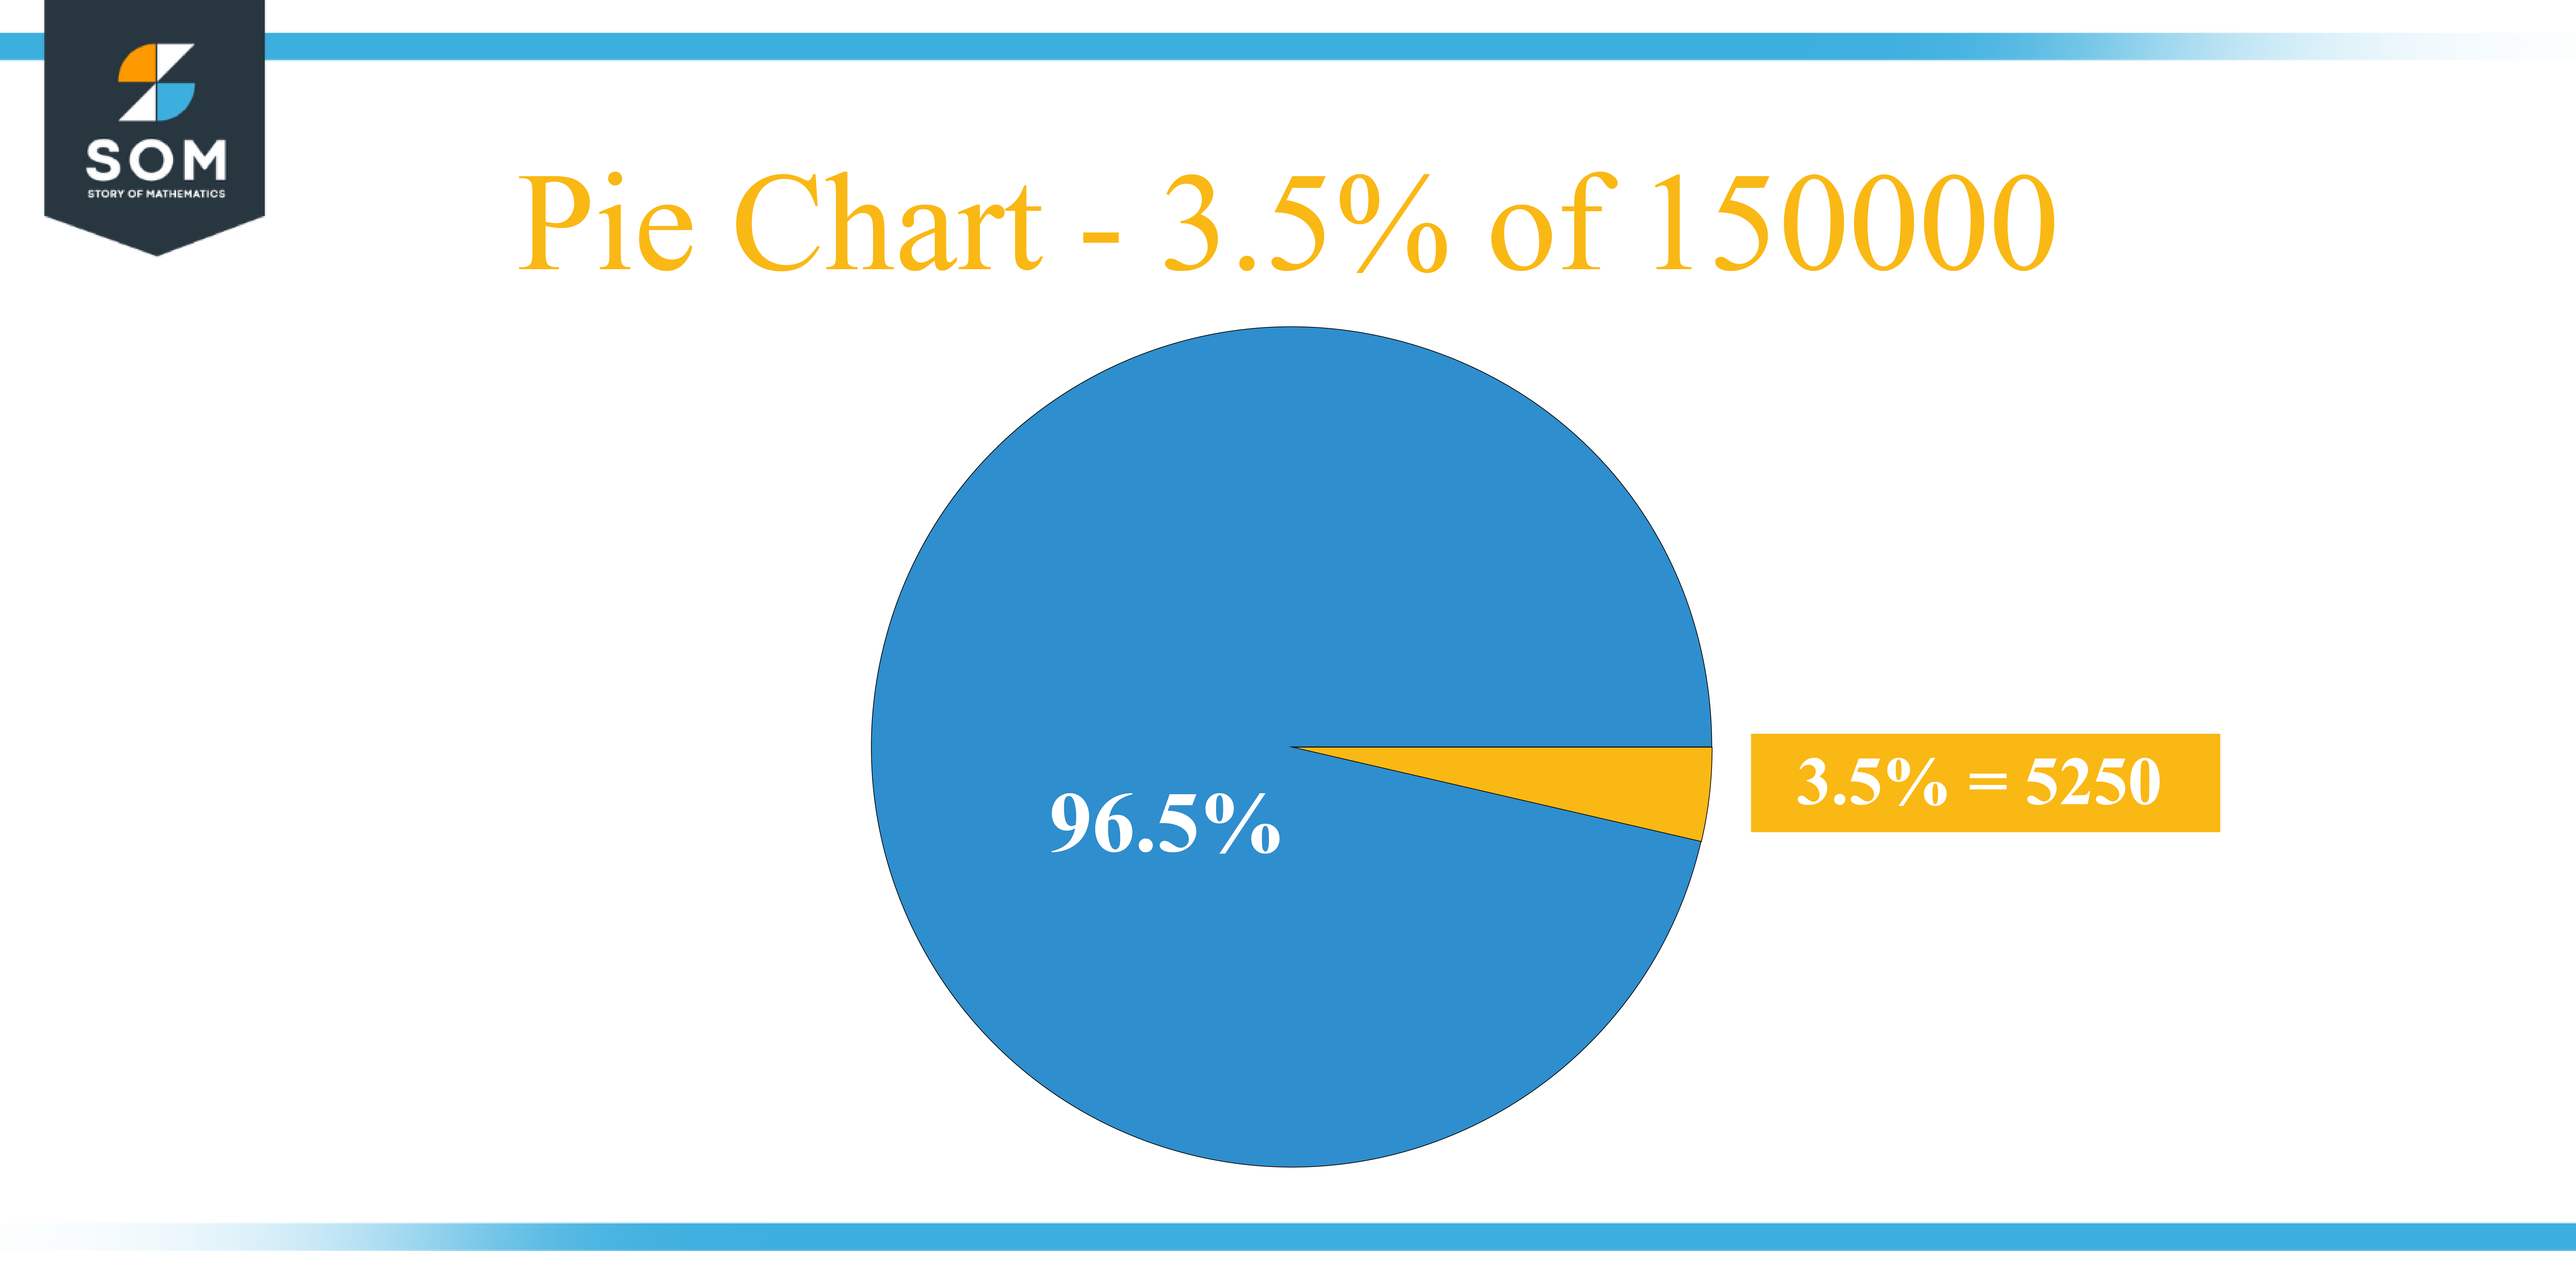 Pie Chart 3.5 percent of 150000